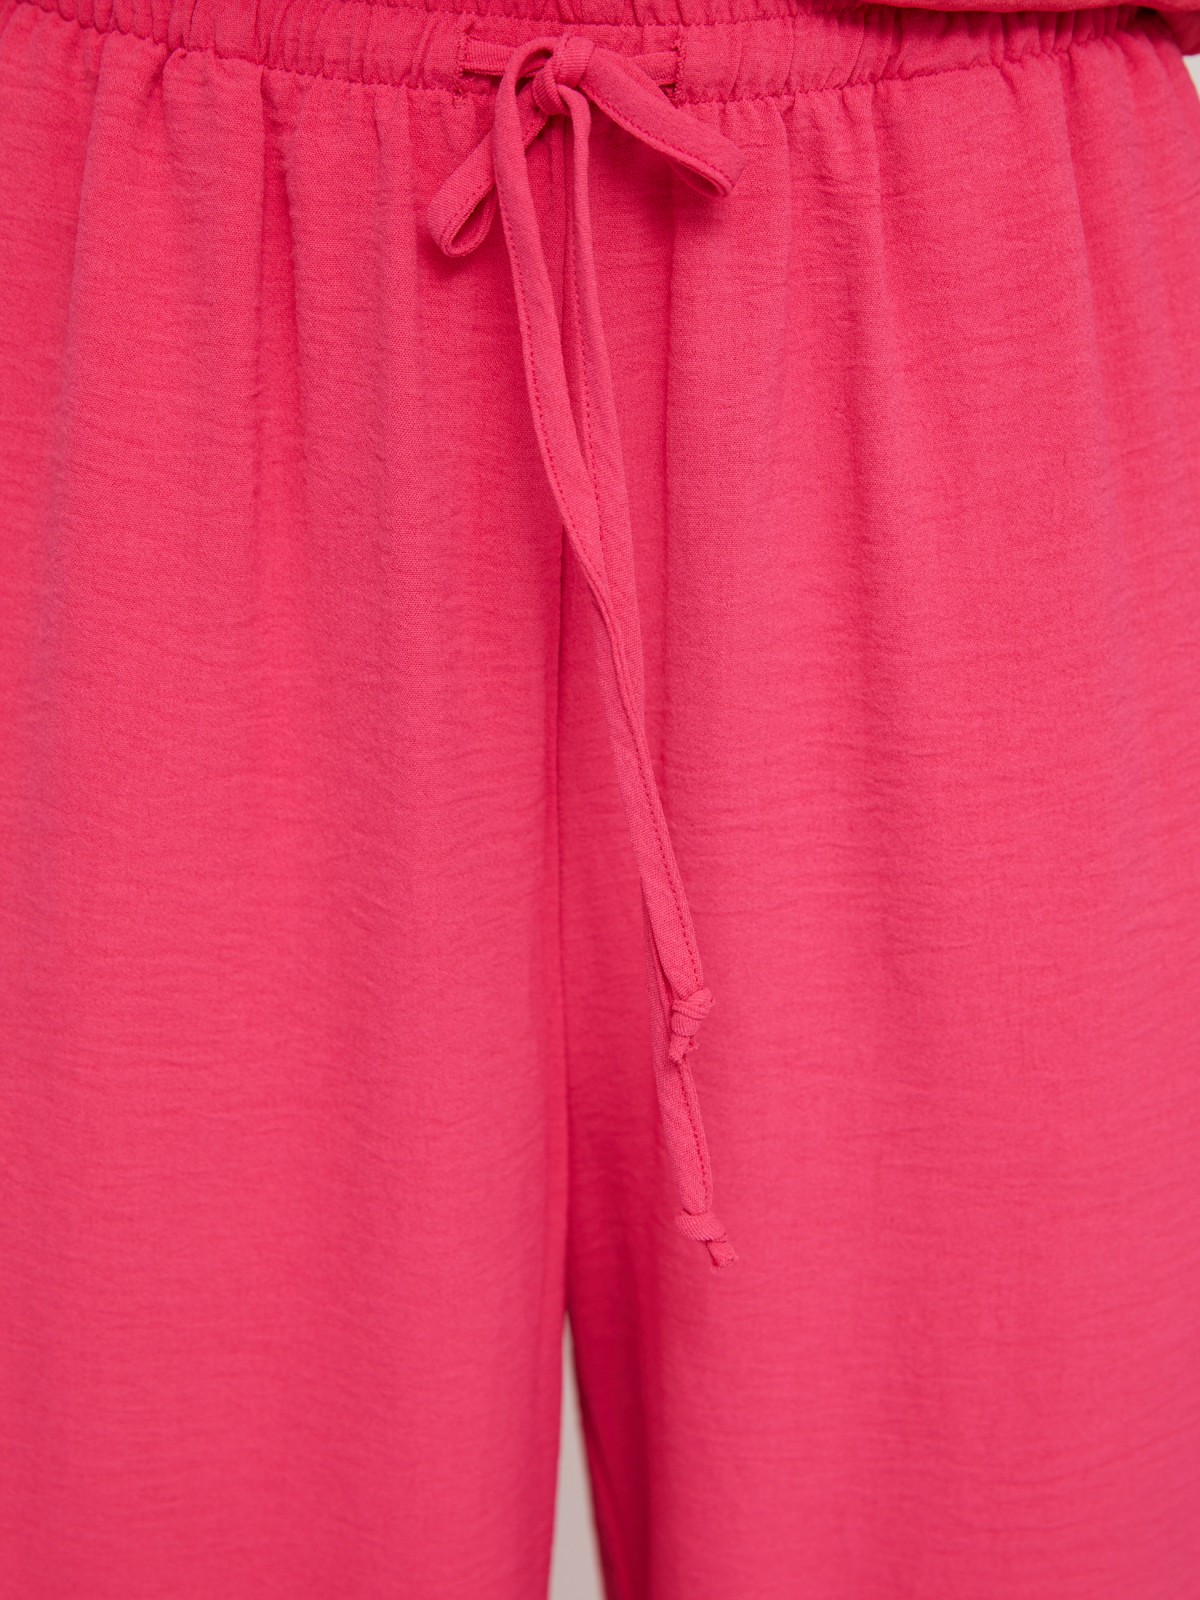 Прямые брюки на резинке с кулиской zolla 024247362013, цвет фуксия, размер XS - фото 4